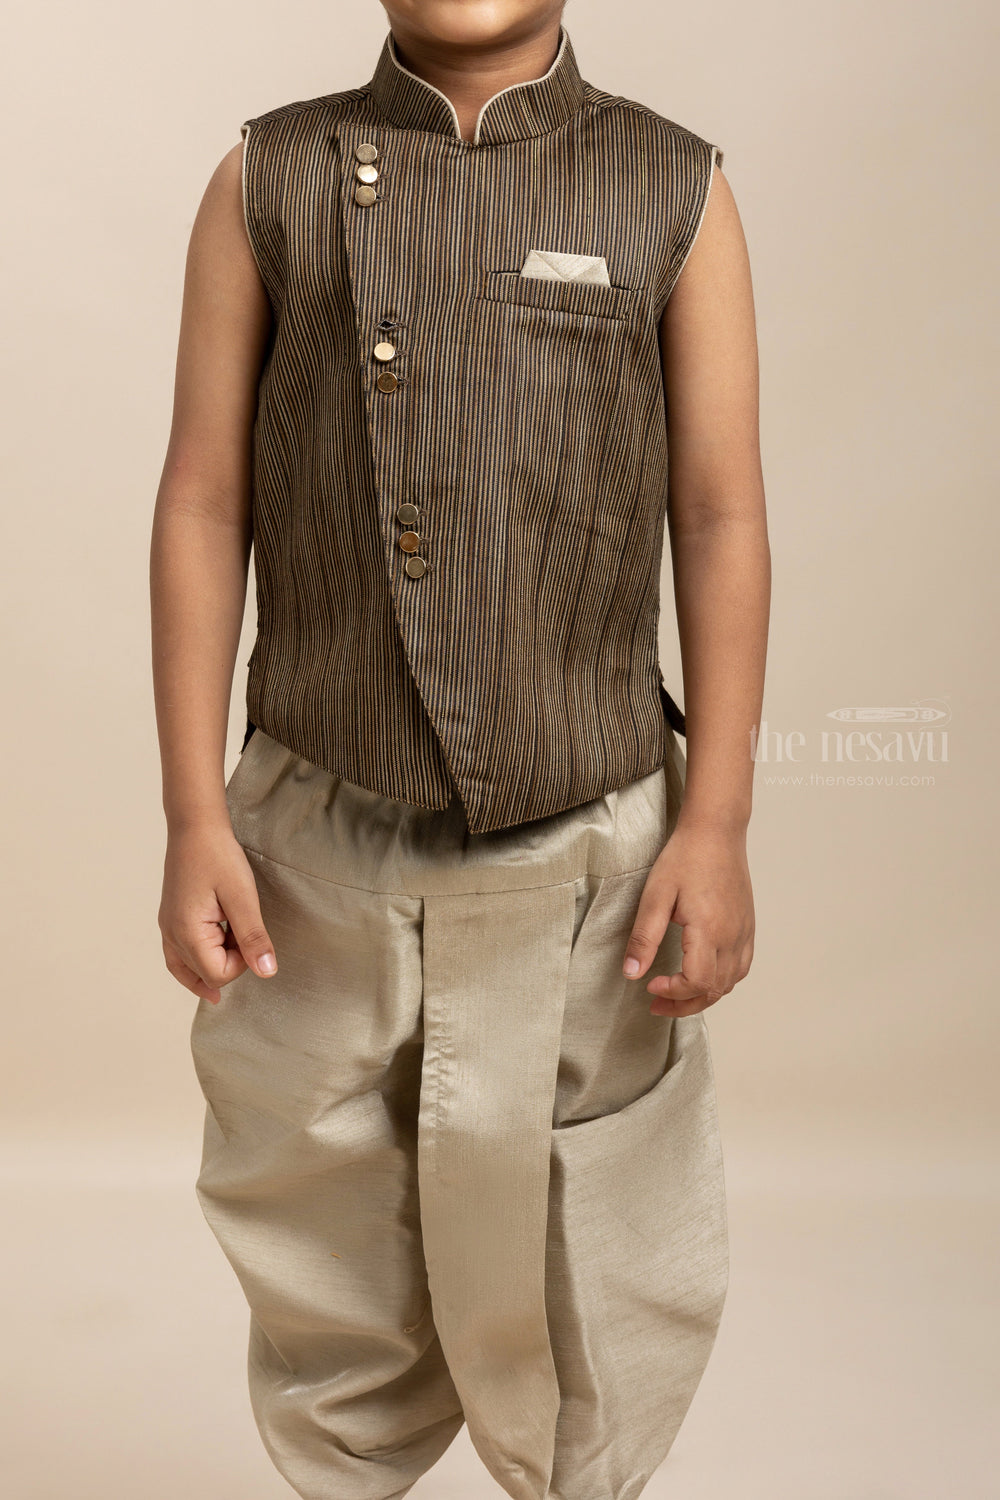 The Nesavu Boys Dothi Set Ash Grey Designer Side Buttoned Kurta Suit For Boy Kids Nesavu Grey Silk Cotton Kurta For Boys | Kids Wear Ethnic Ideas Online | The Nesavu